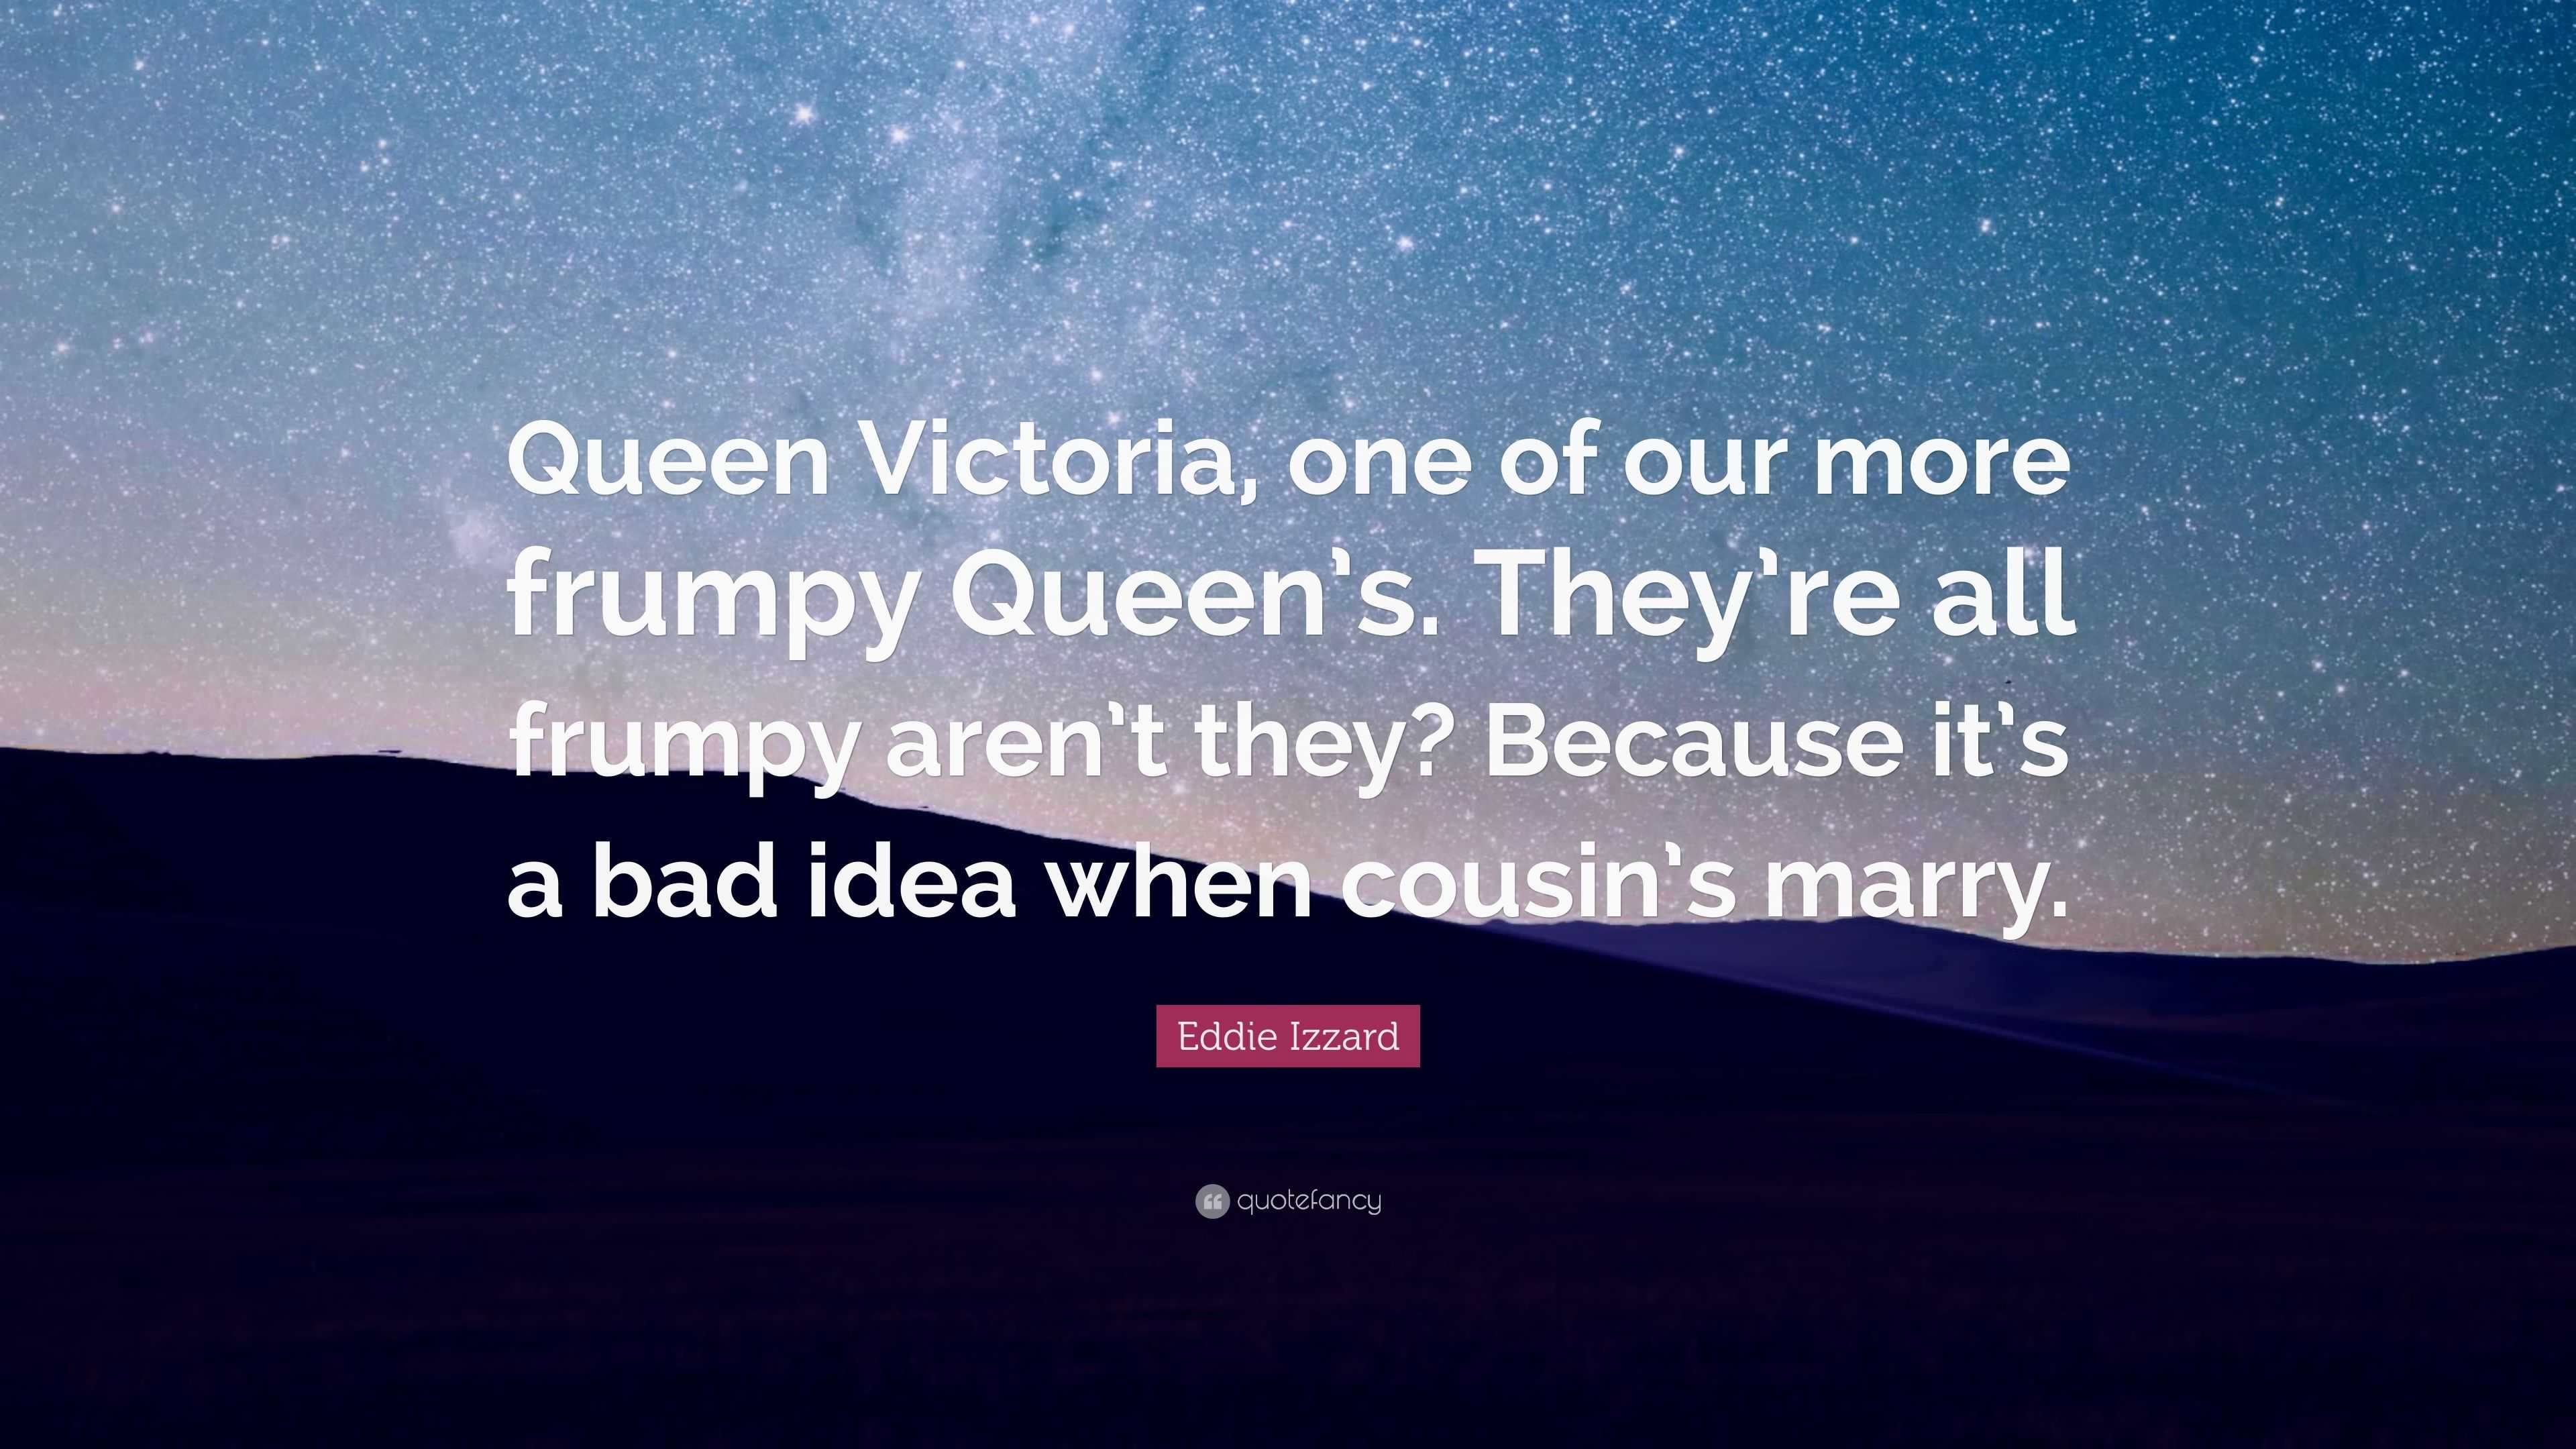 Eddie Izzard Quote: “Queen Victoria, one of our more frumpy Queen’s ...